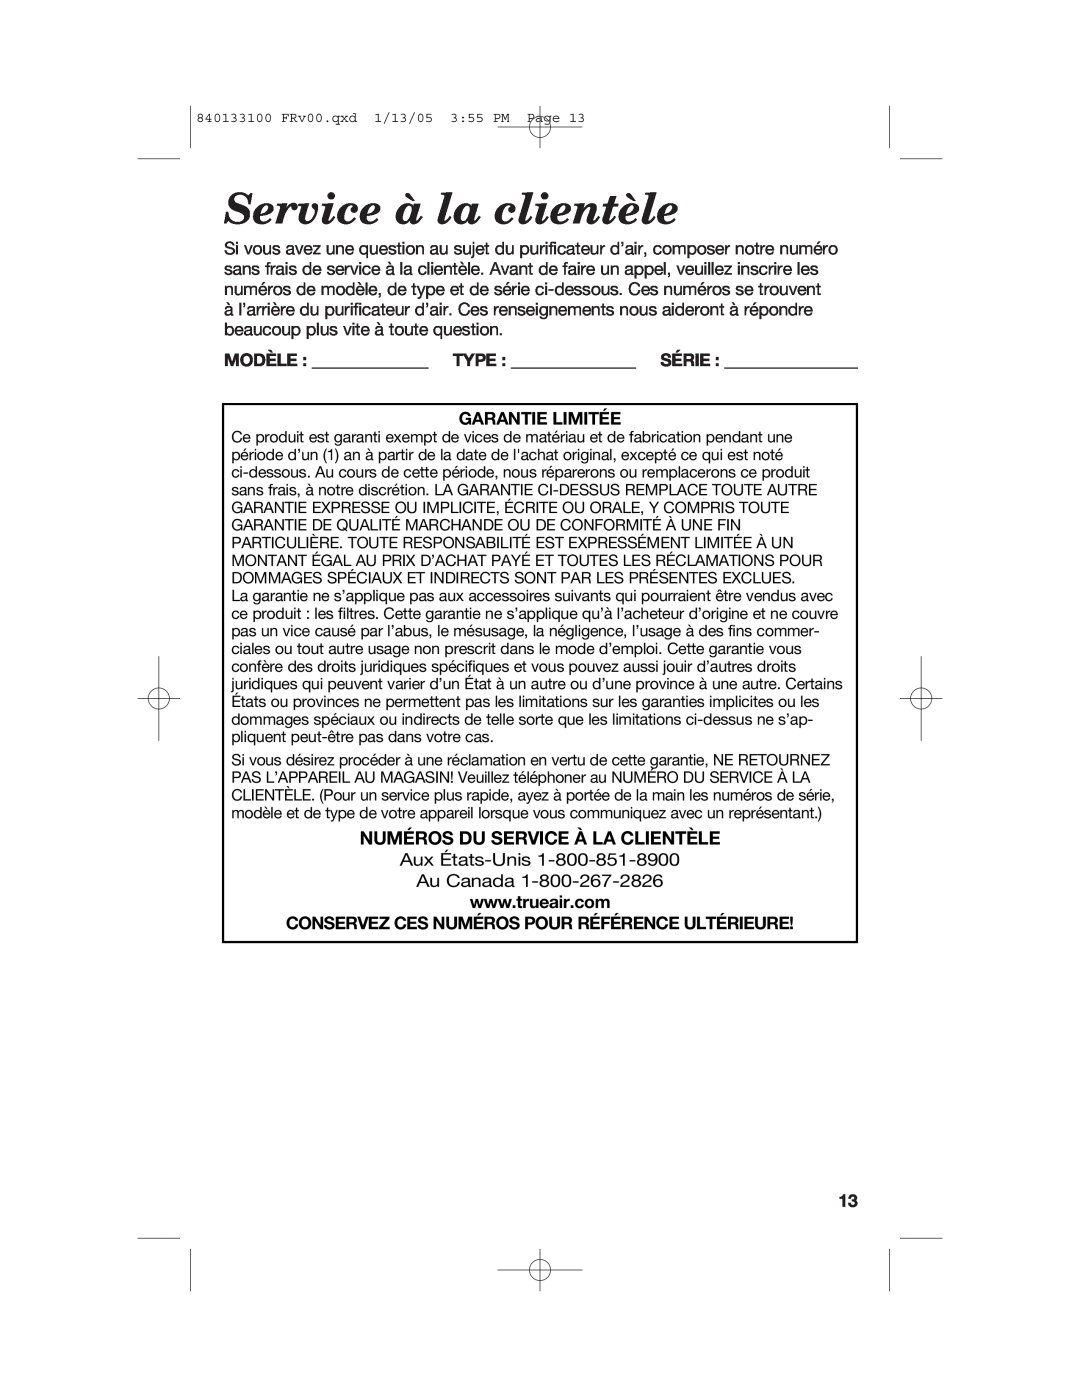 Hamilton Beach HEPA manual Service à la clientèle, Numéros Du Service À La Clientèle, Garantie Limitée 